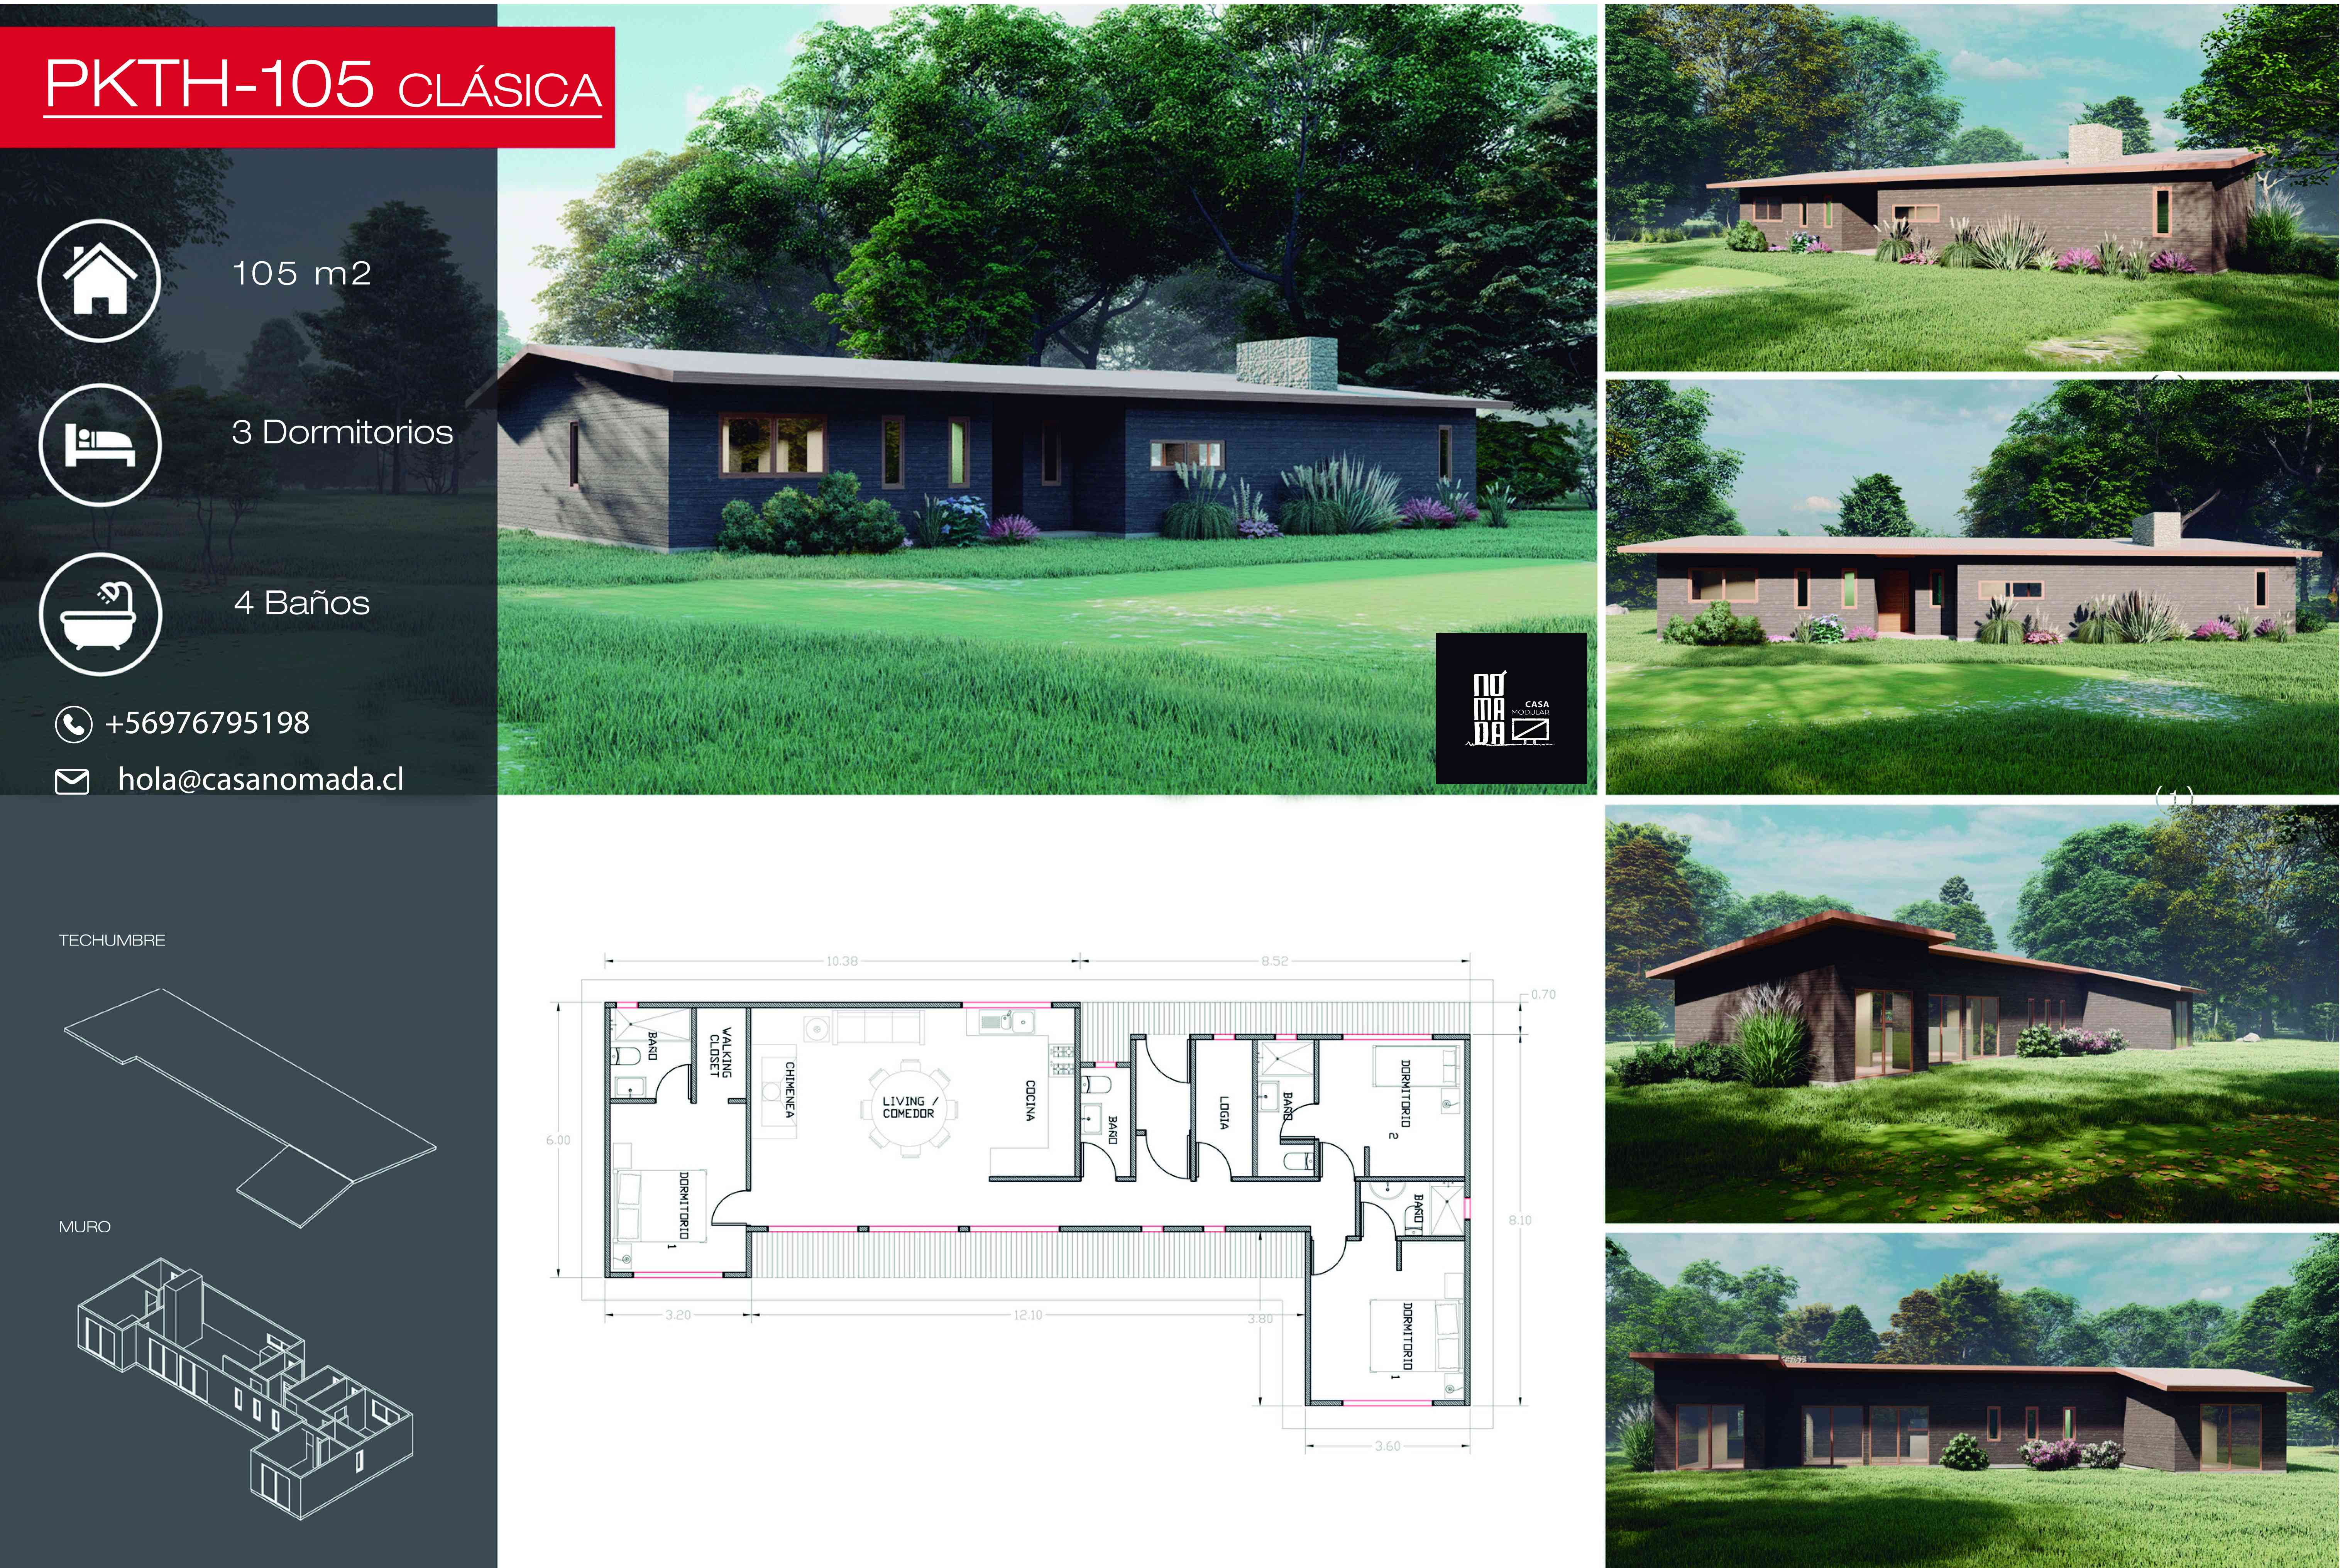 Casa 105 M2 / Kit Basico - Autoconstruccion